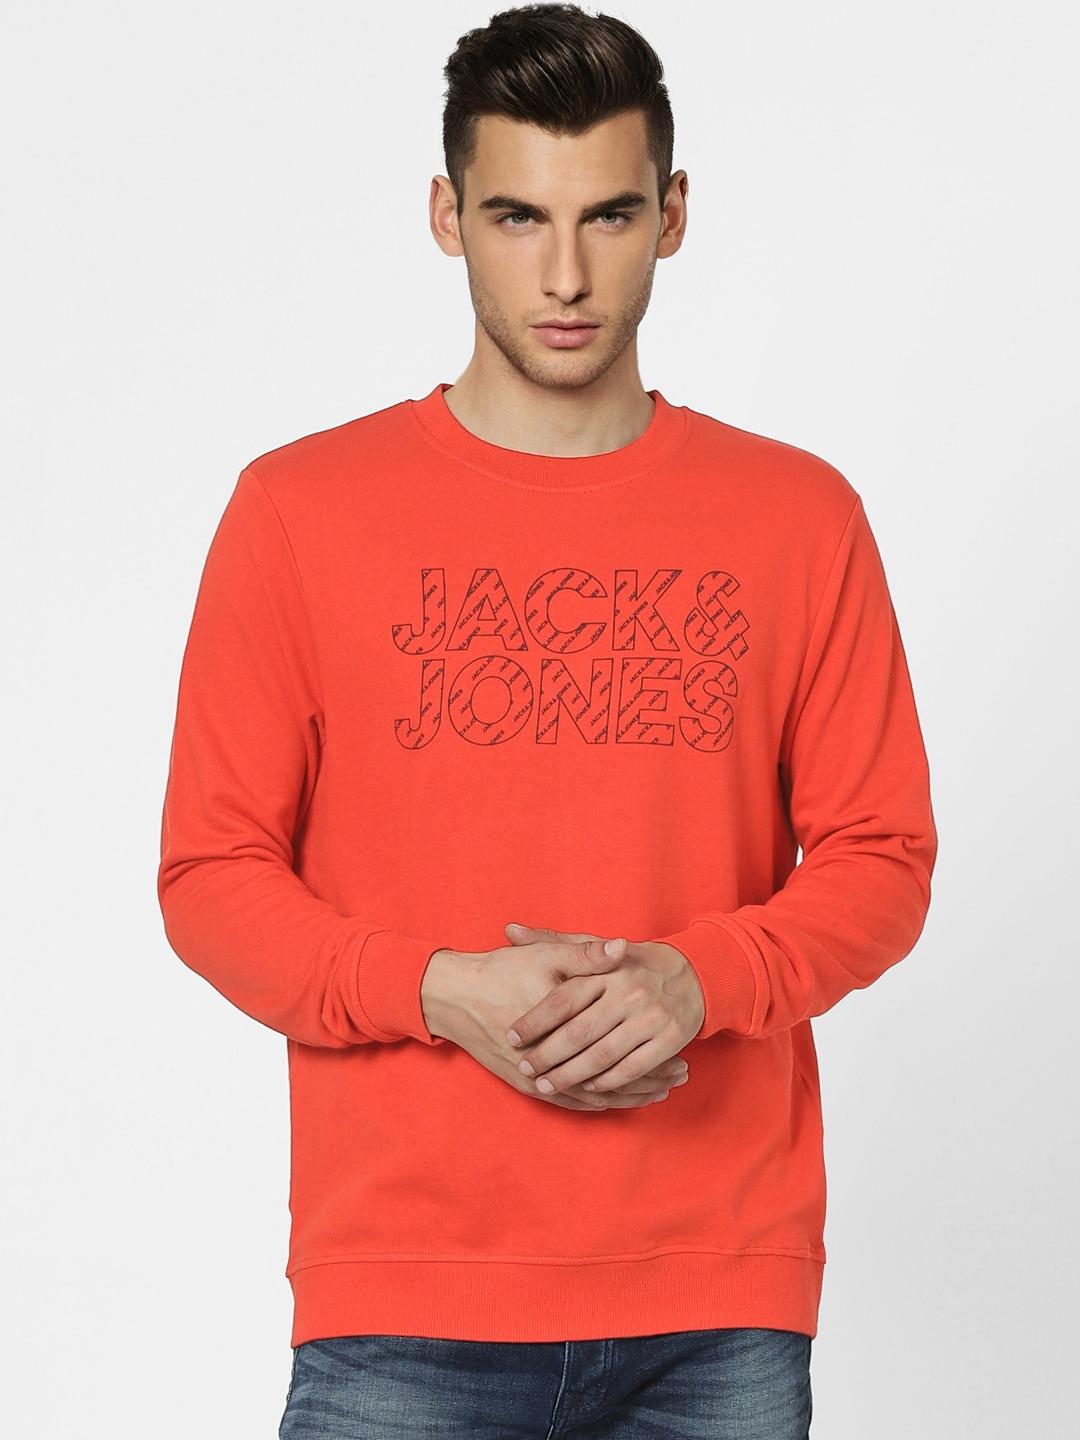 jack-&-jones-men-red-logo-printed-sweatshirt